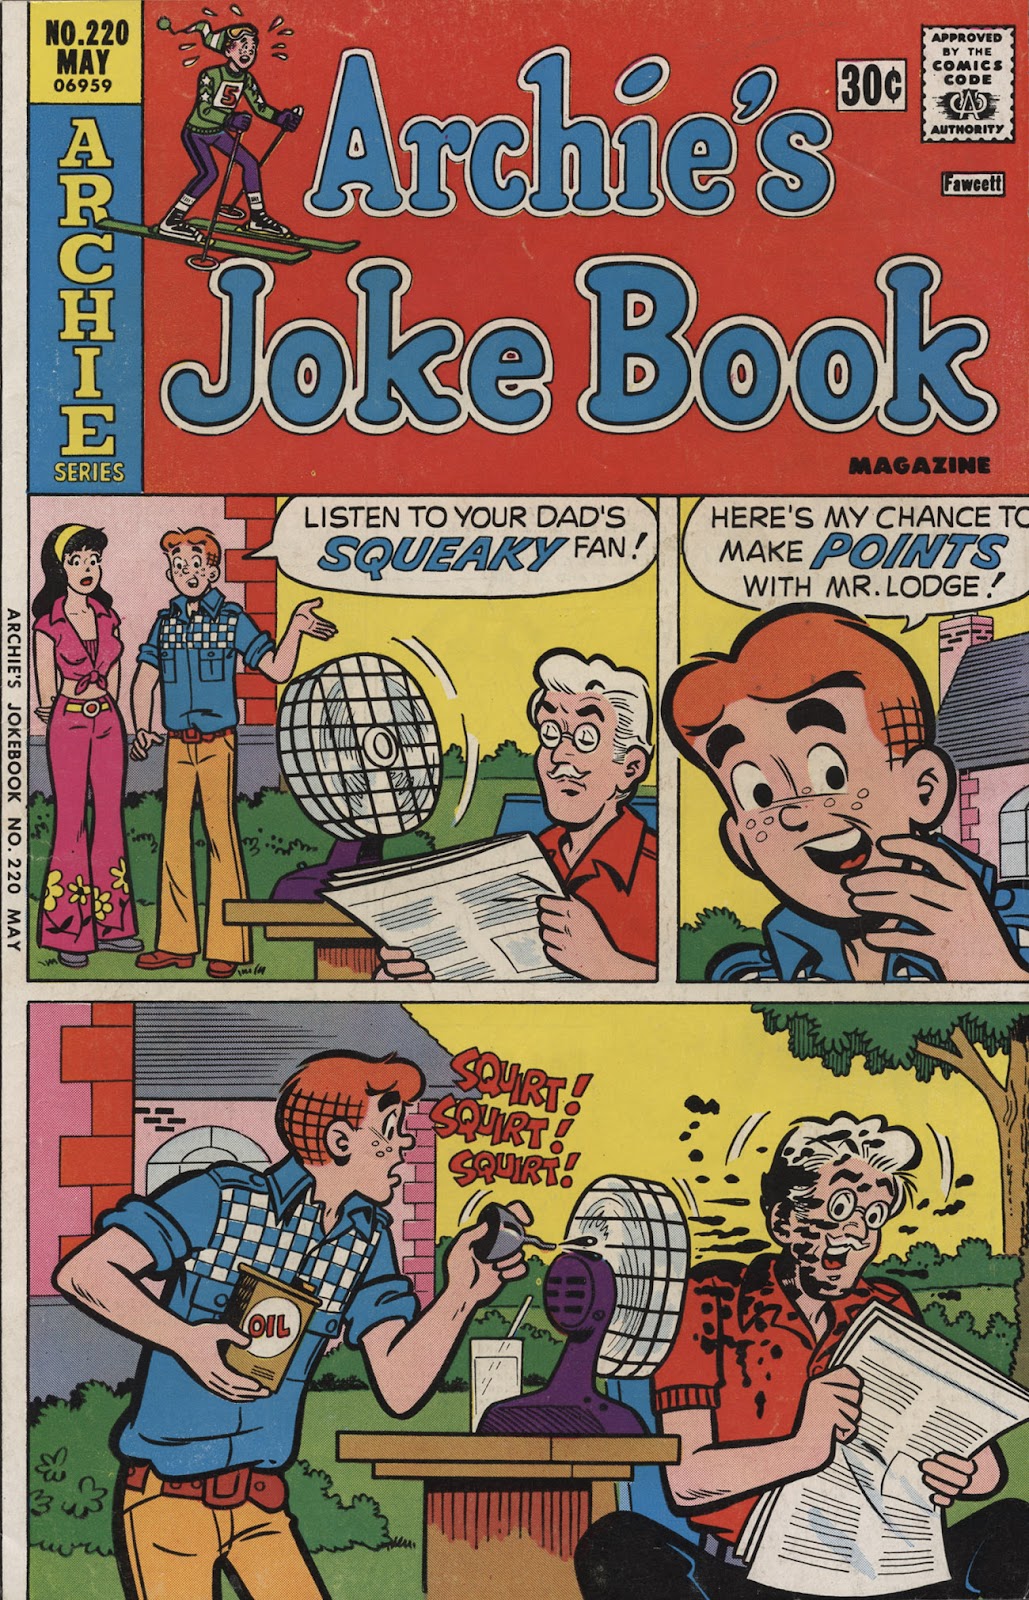 Archie's Joke Book Magazine issue 220 - Page 1